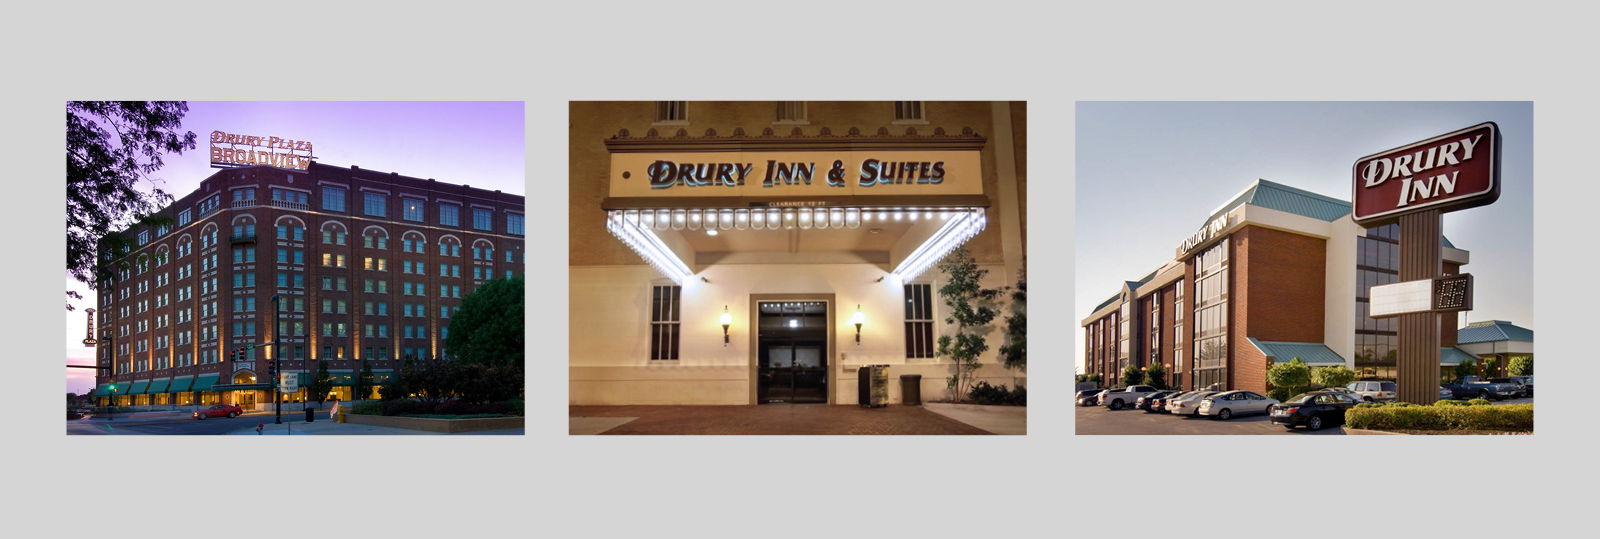 Drury Hotels three photos of hotel facades